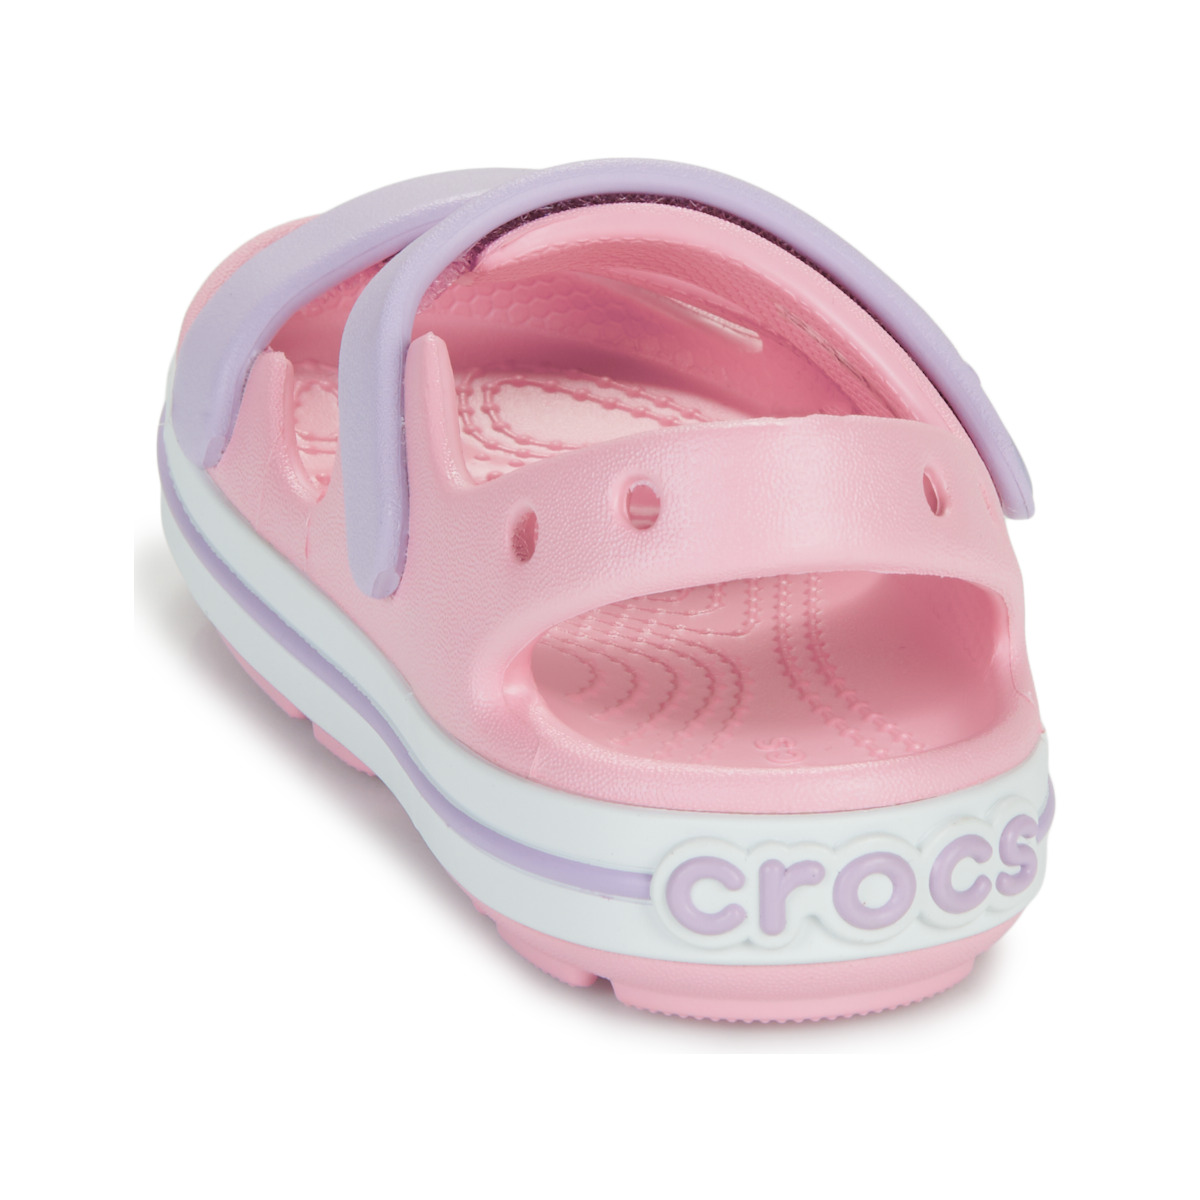 Crocs Rose Crocband Cruiser Sandal T zMMDXv8Z